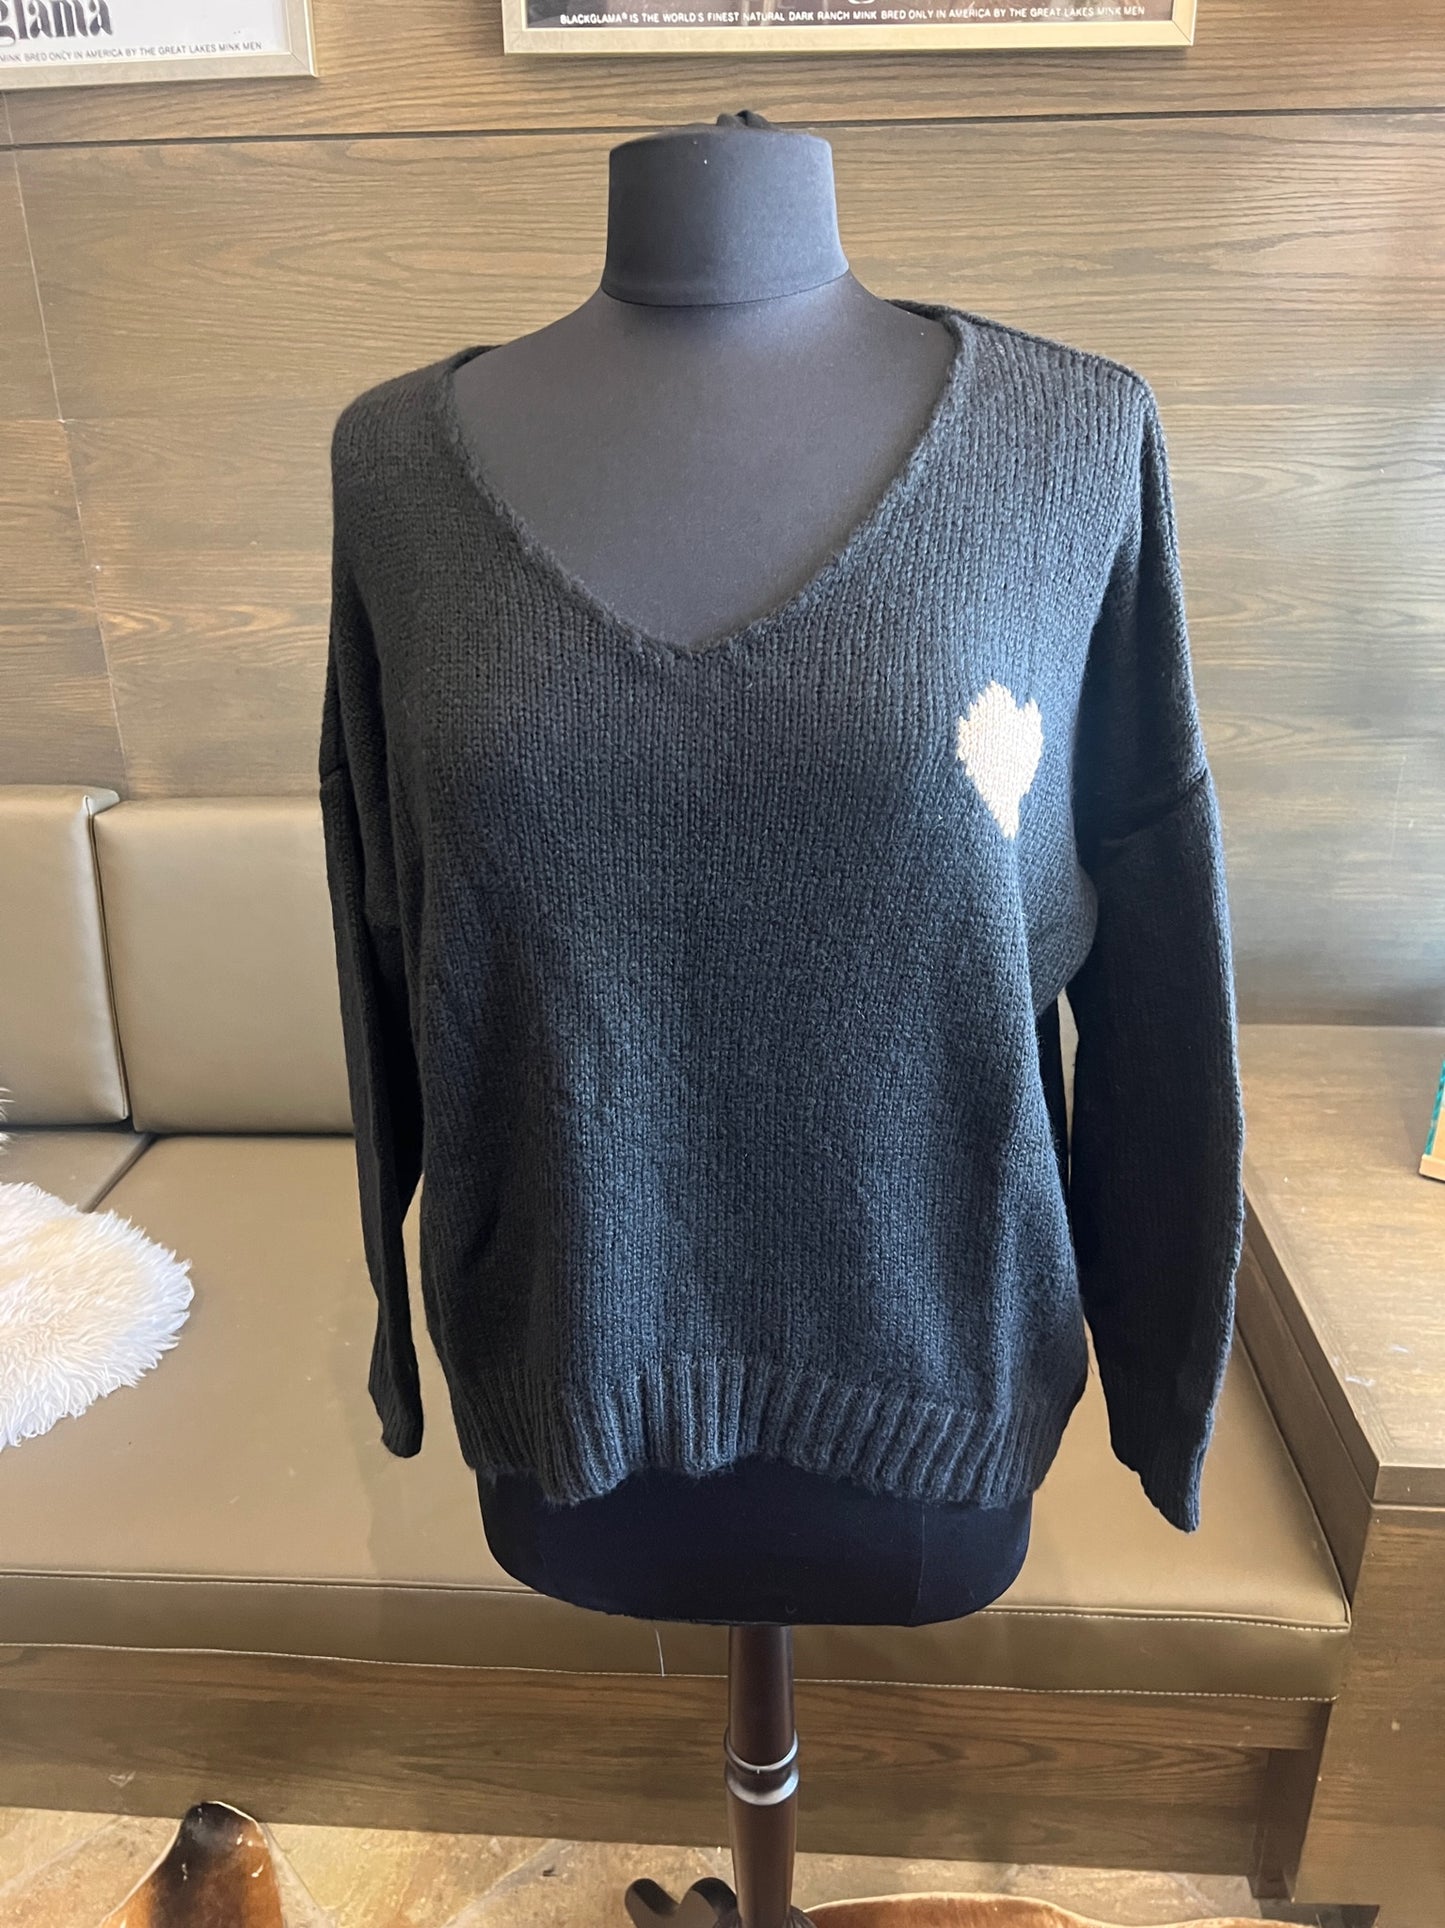 Bella Amore Black w/ Gold Heart Sweater Tops